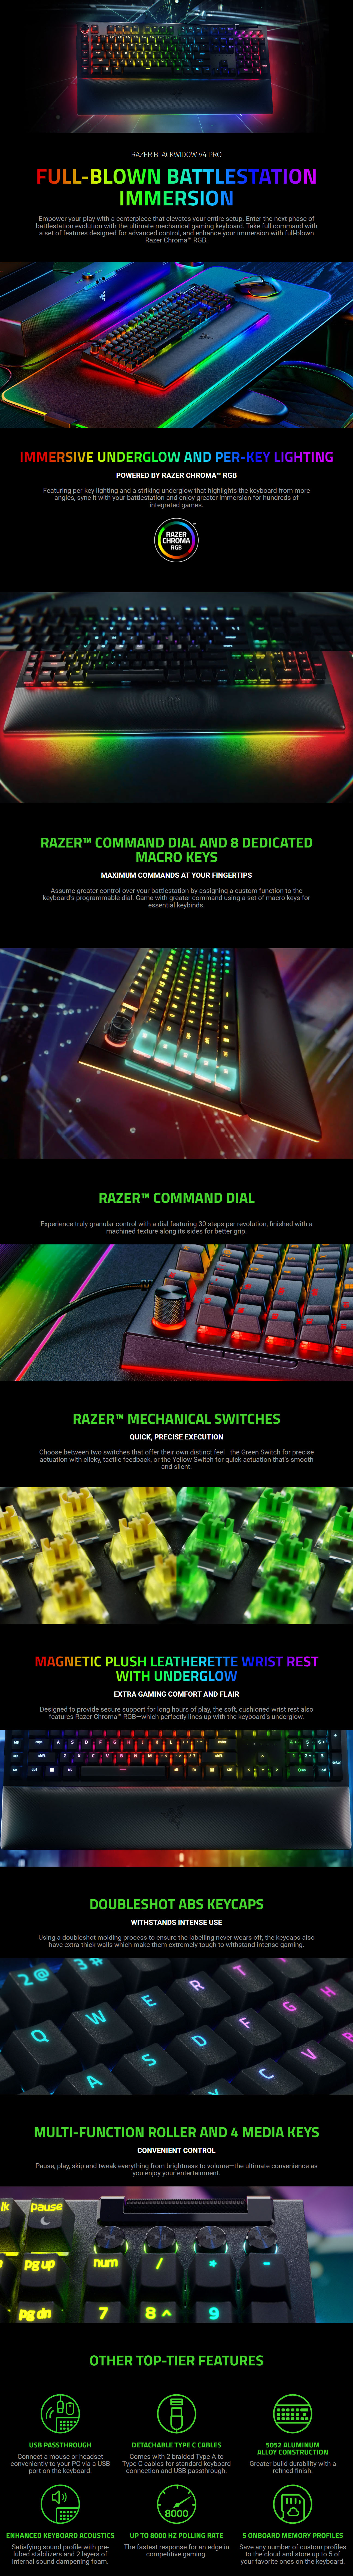 Keyboards-Razer-BlackWidow-V4-Pro-Mechanical-Gaming-Keyboard-Yellow-Switch-1